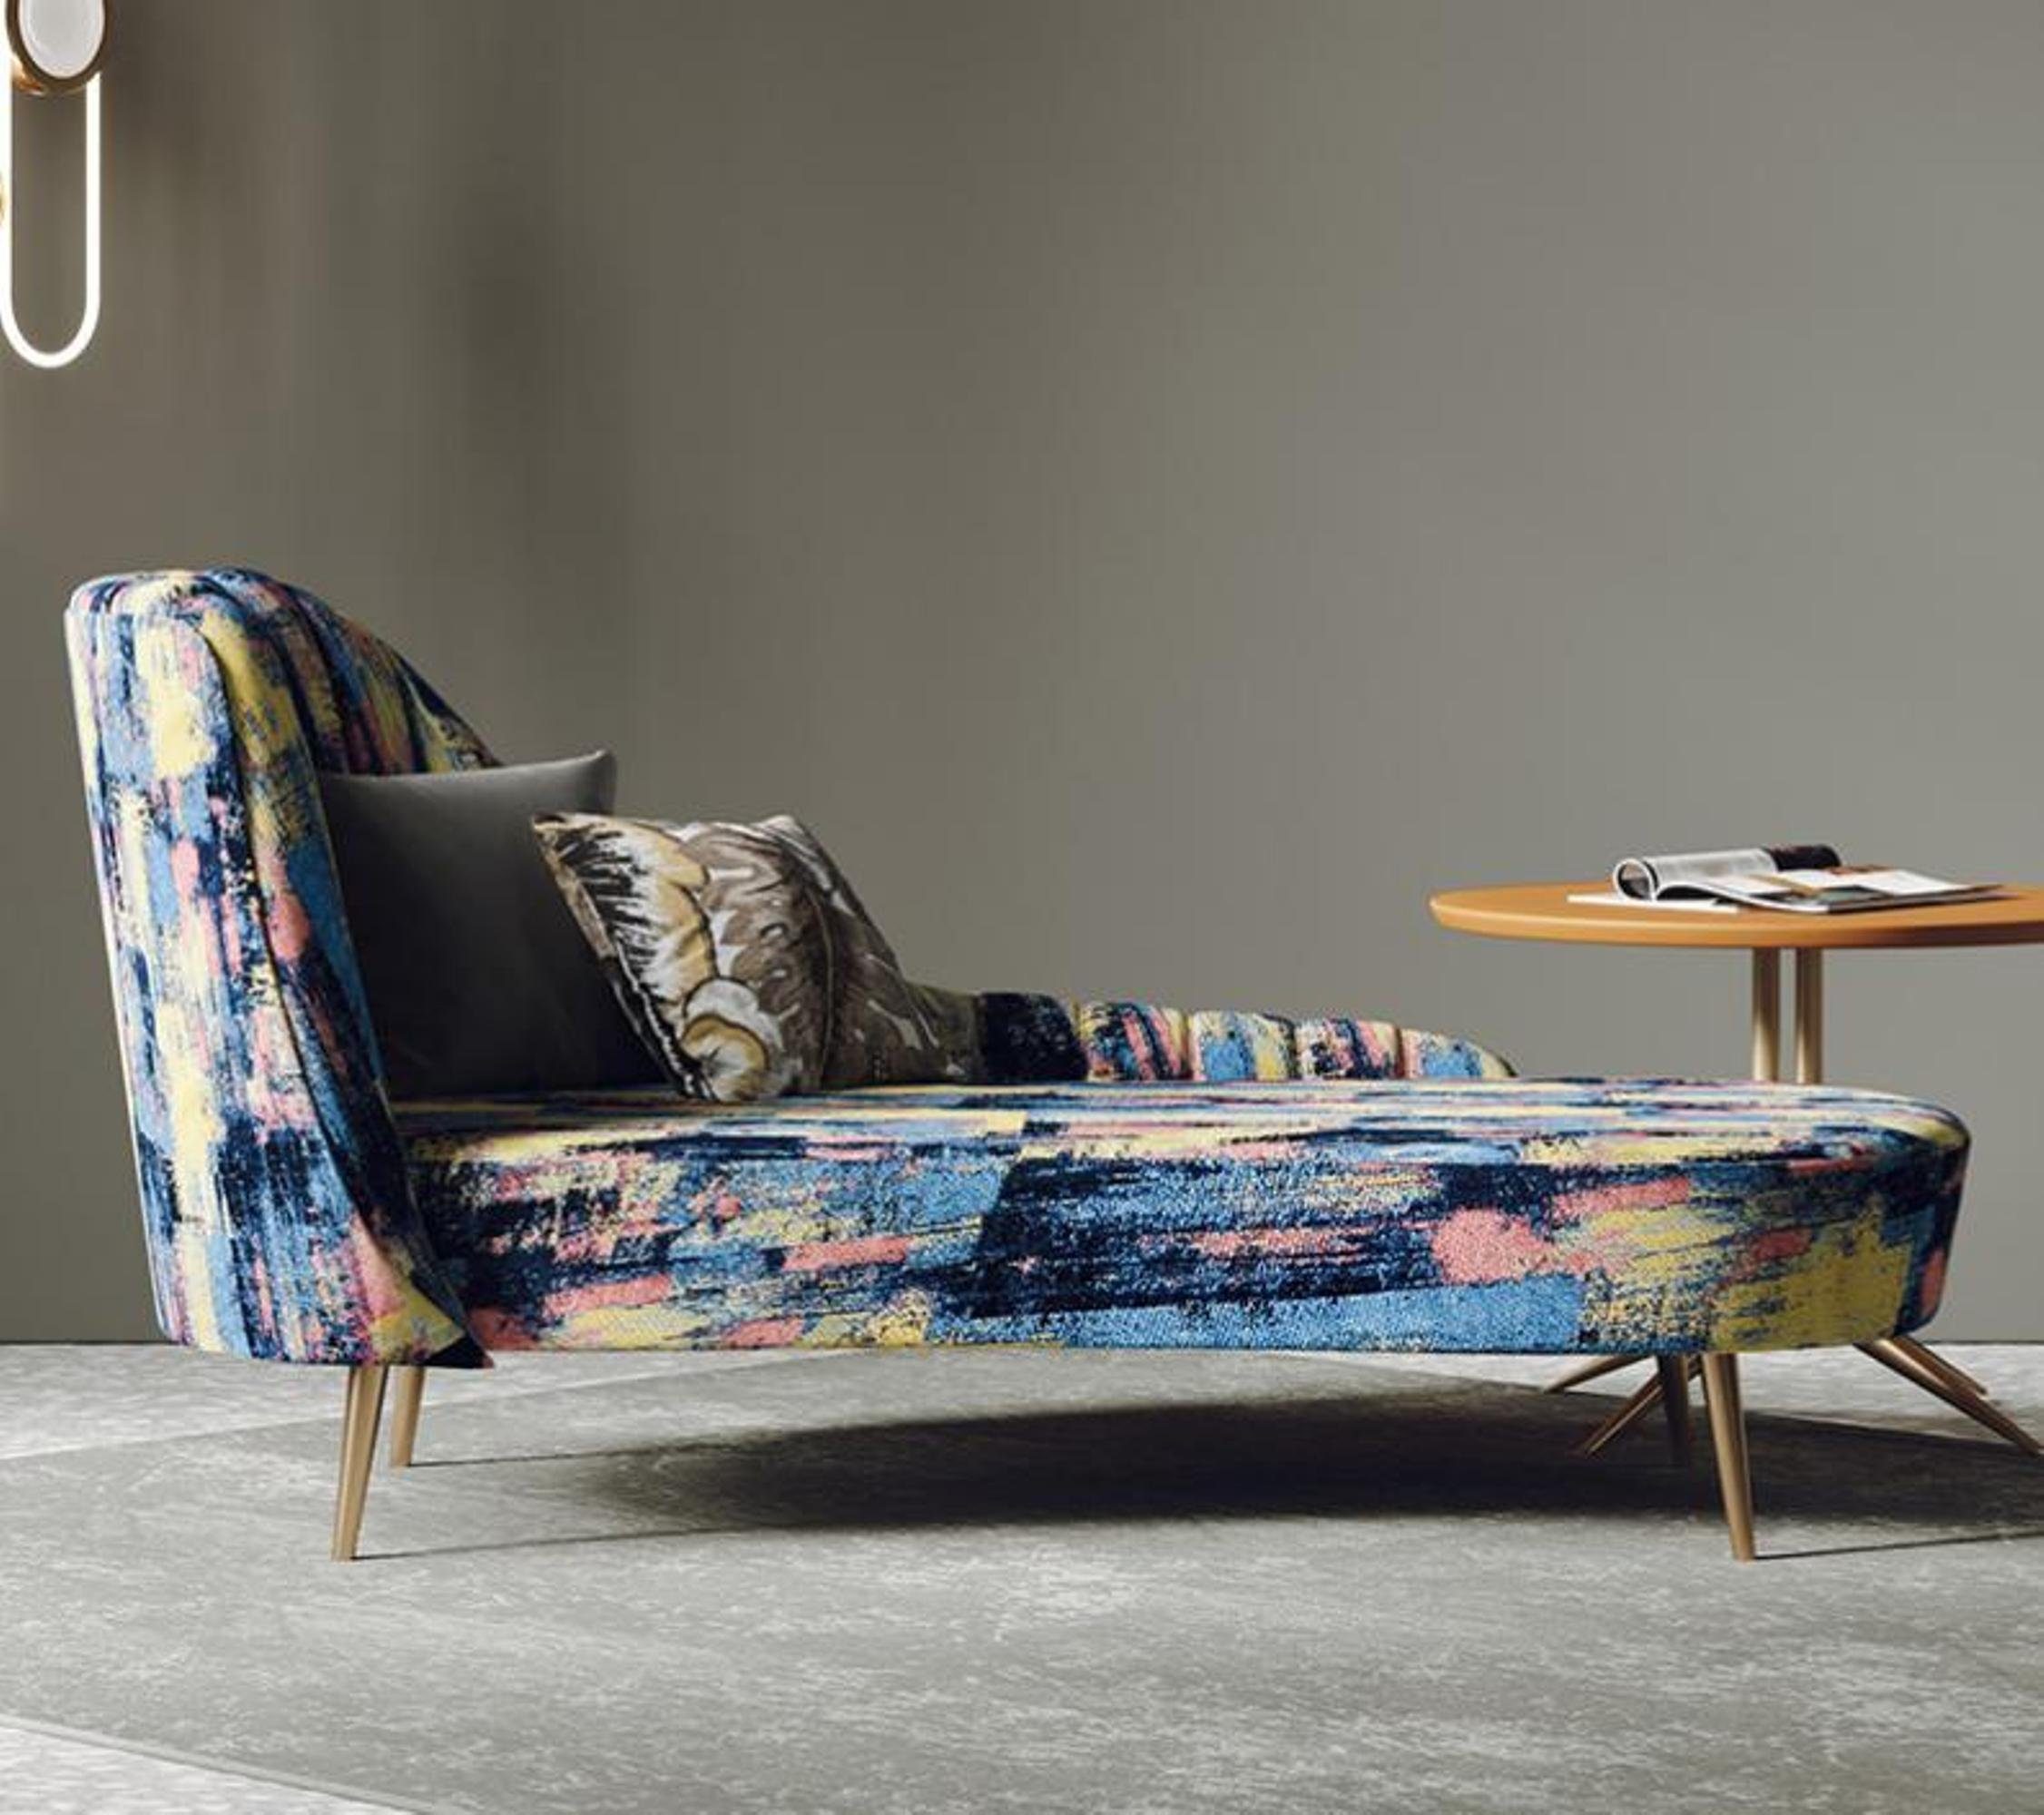 JVmoebel Chaiselongue Bunter Chaiselounge Polster Textil Modern Relax Sitz Luxus Möbel, Made in Europe